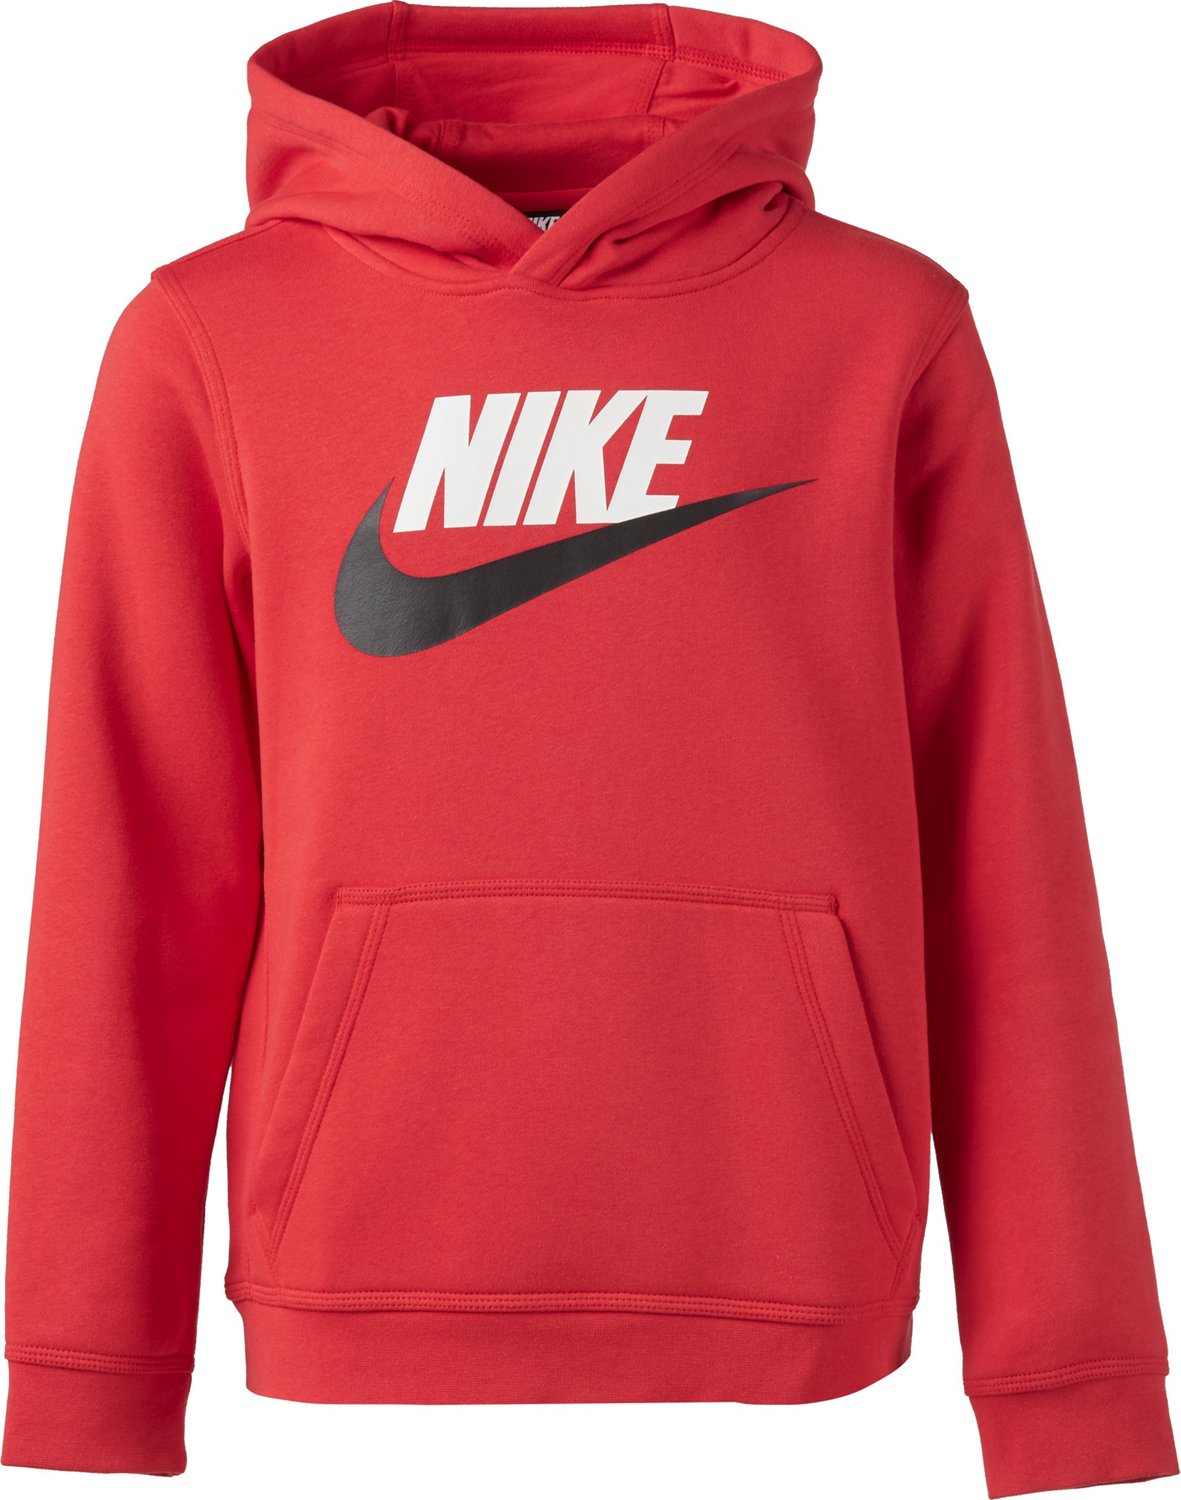 Boys' Hoodies + Sweatshirts by Nike 